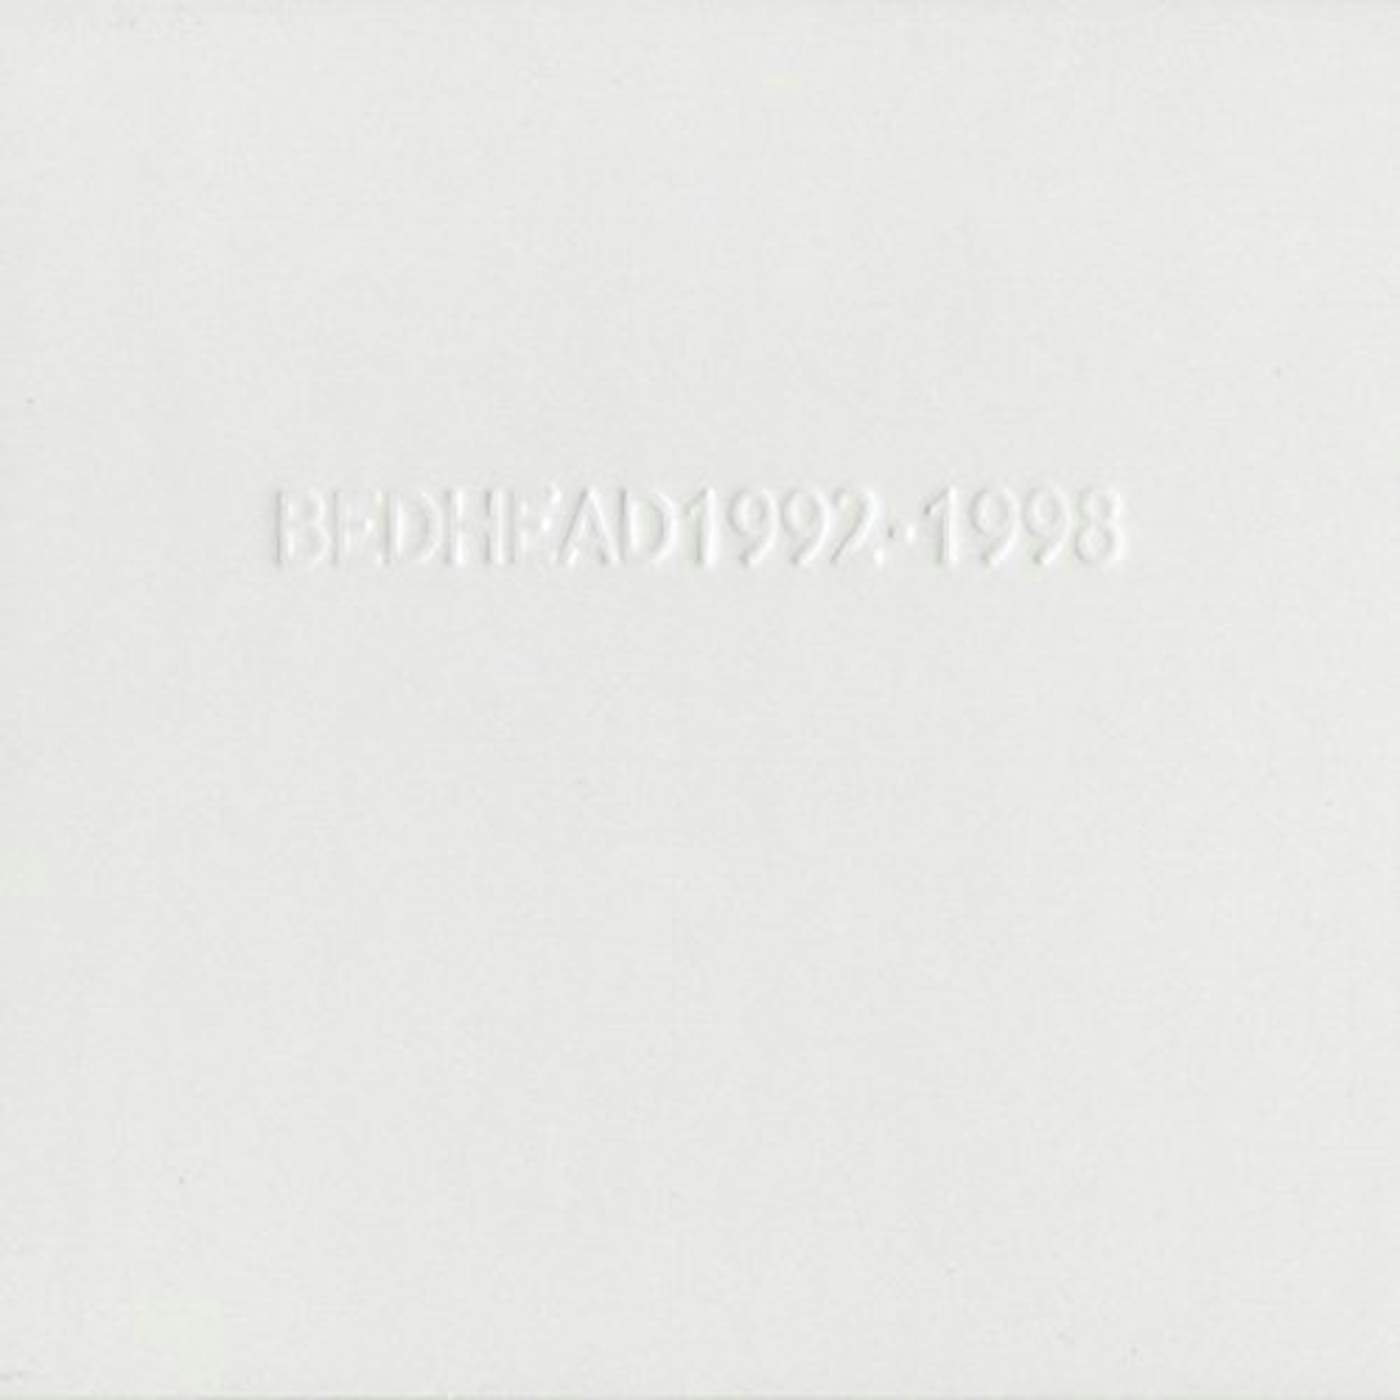 Bedhead 1992-1996 CD